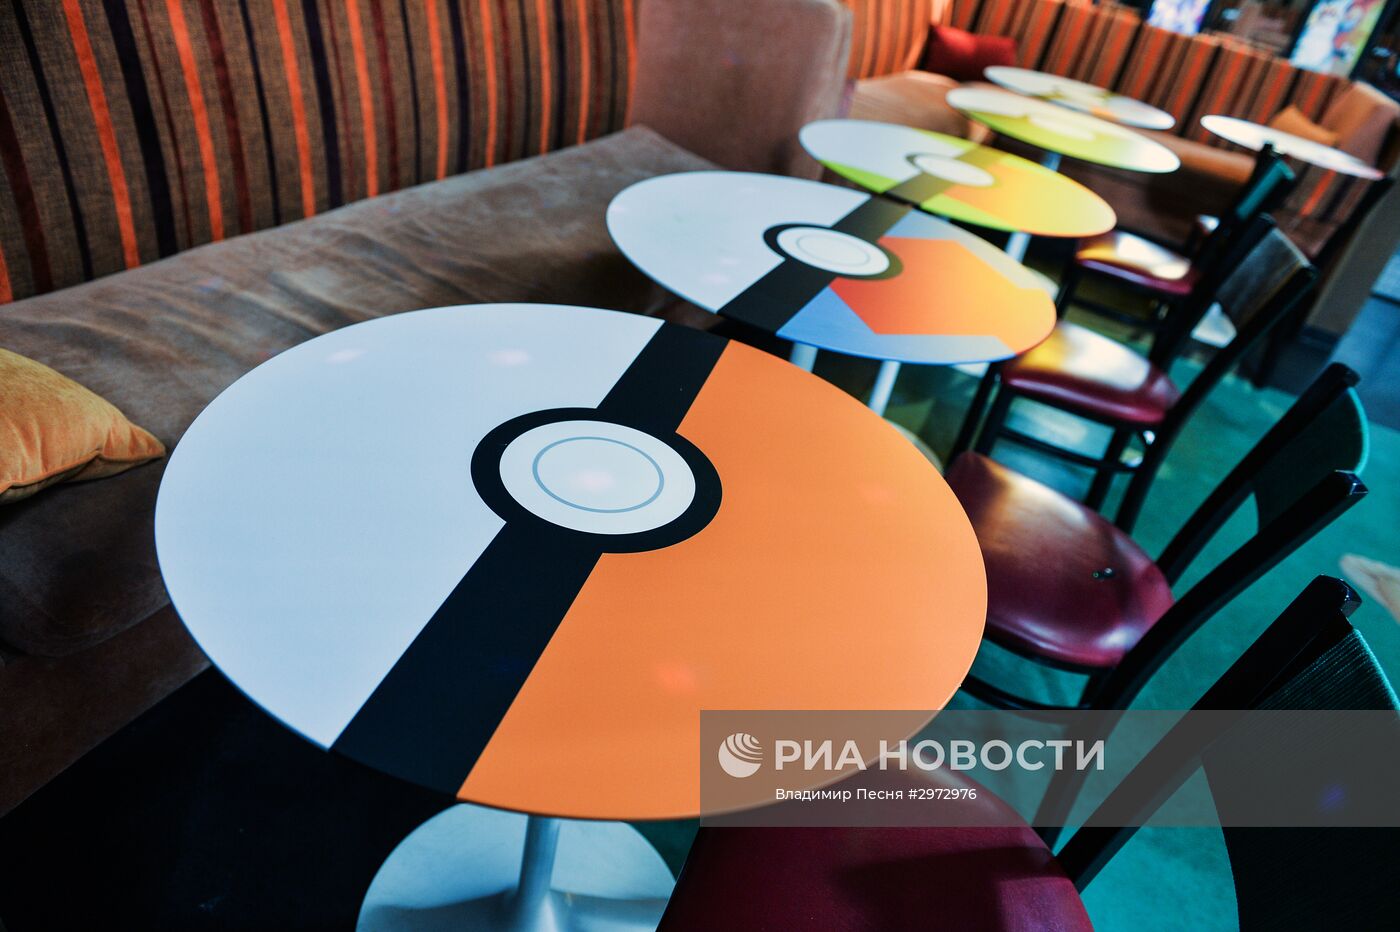 Pokeville cafe в Москве